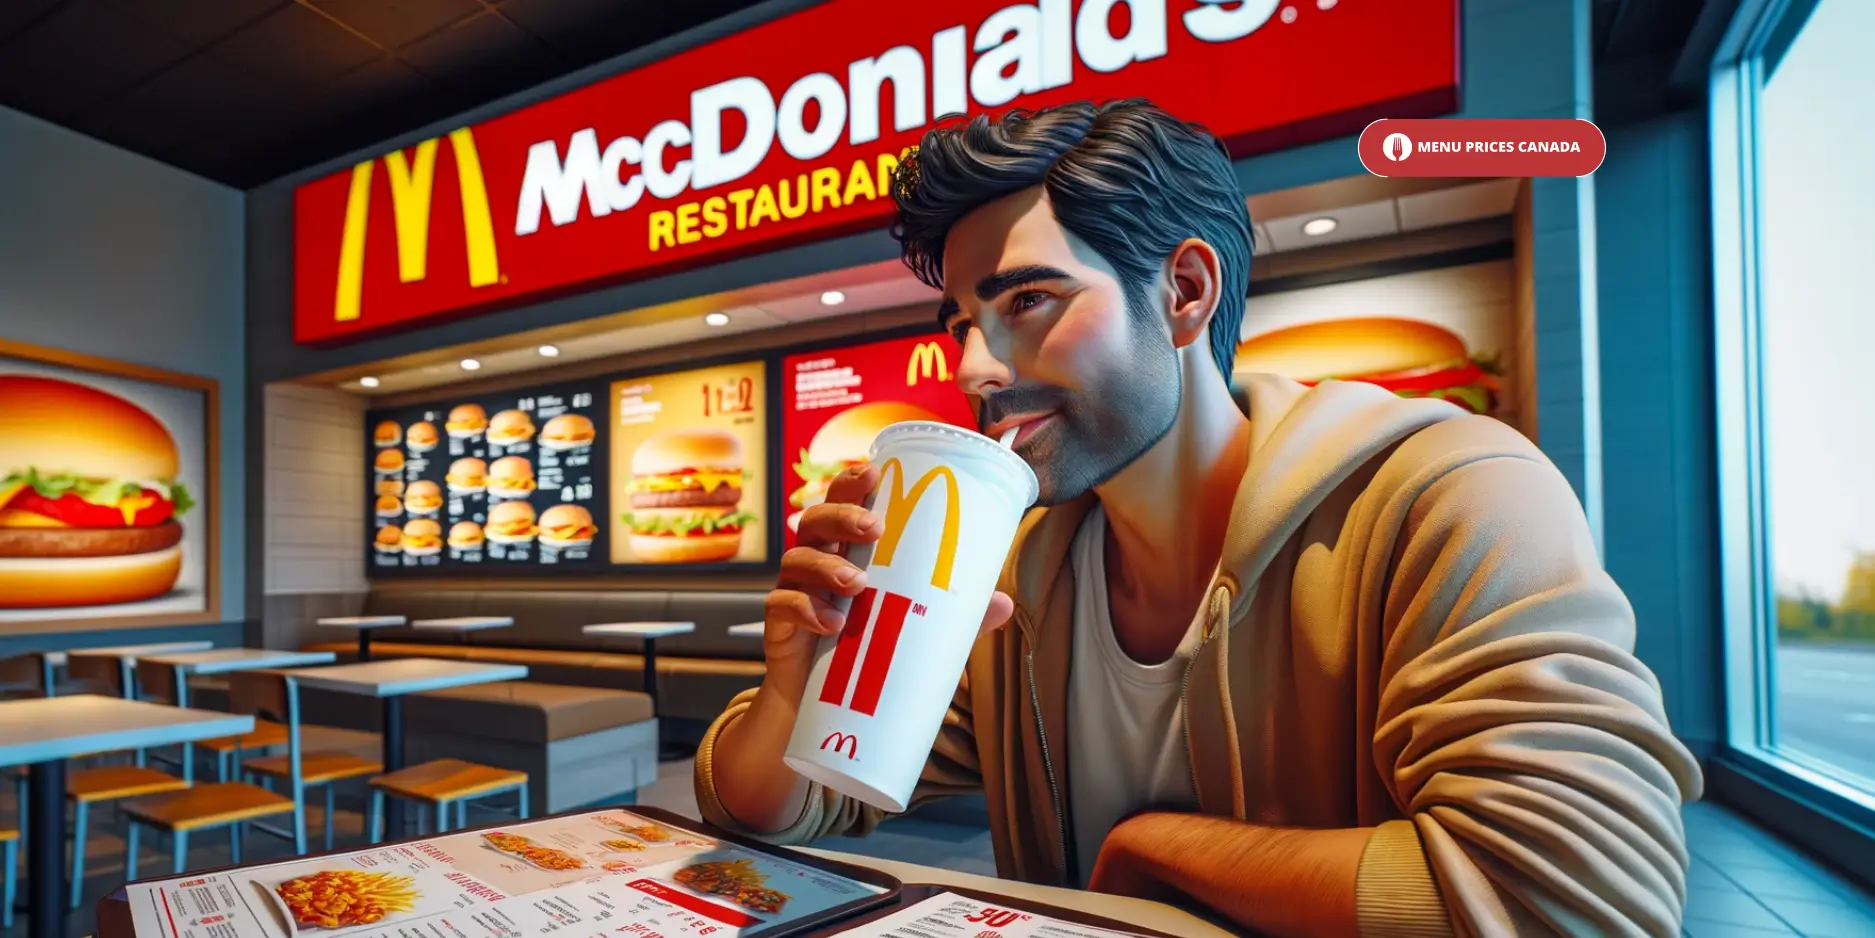 McDonald’s-restaurant-Drinks-Menu-Prices-Canada